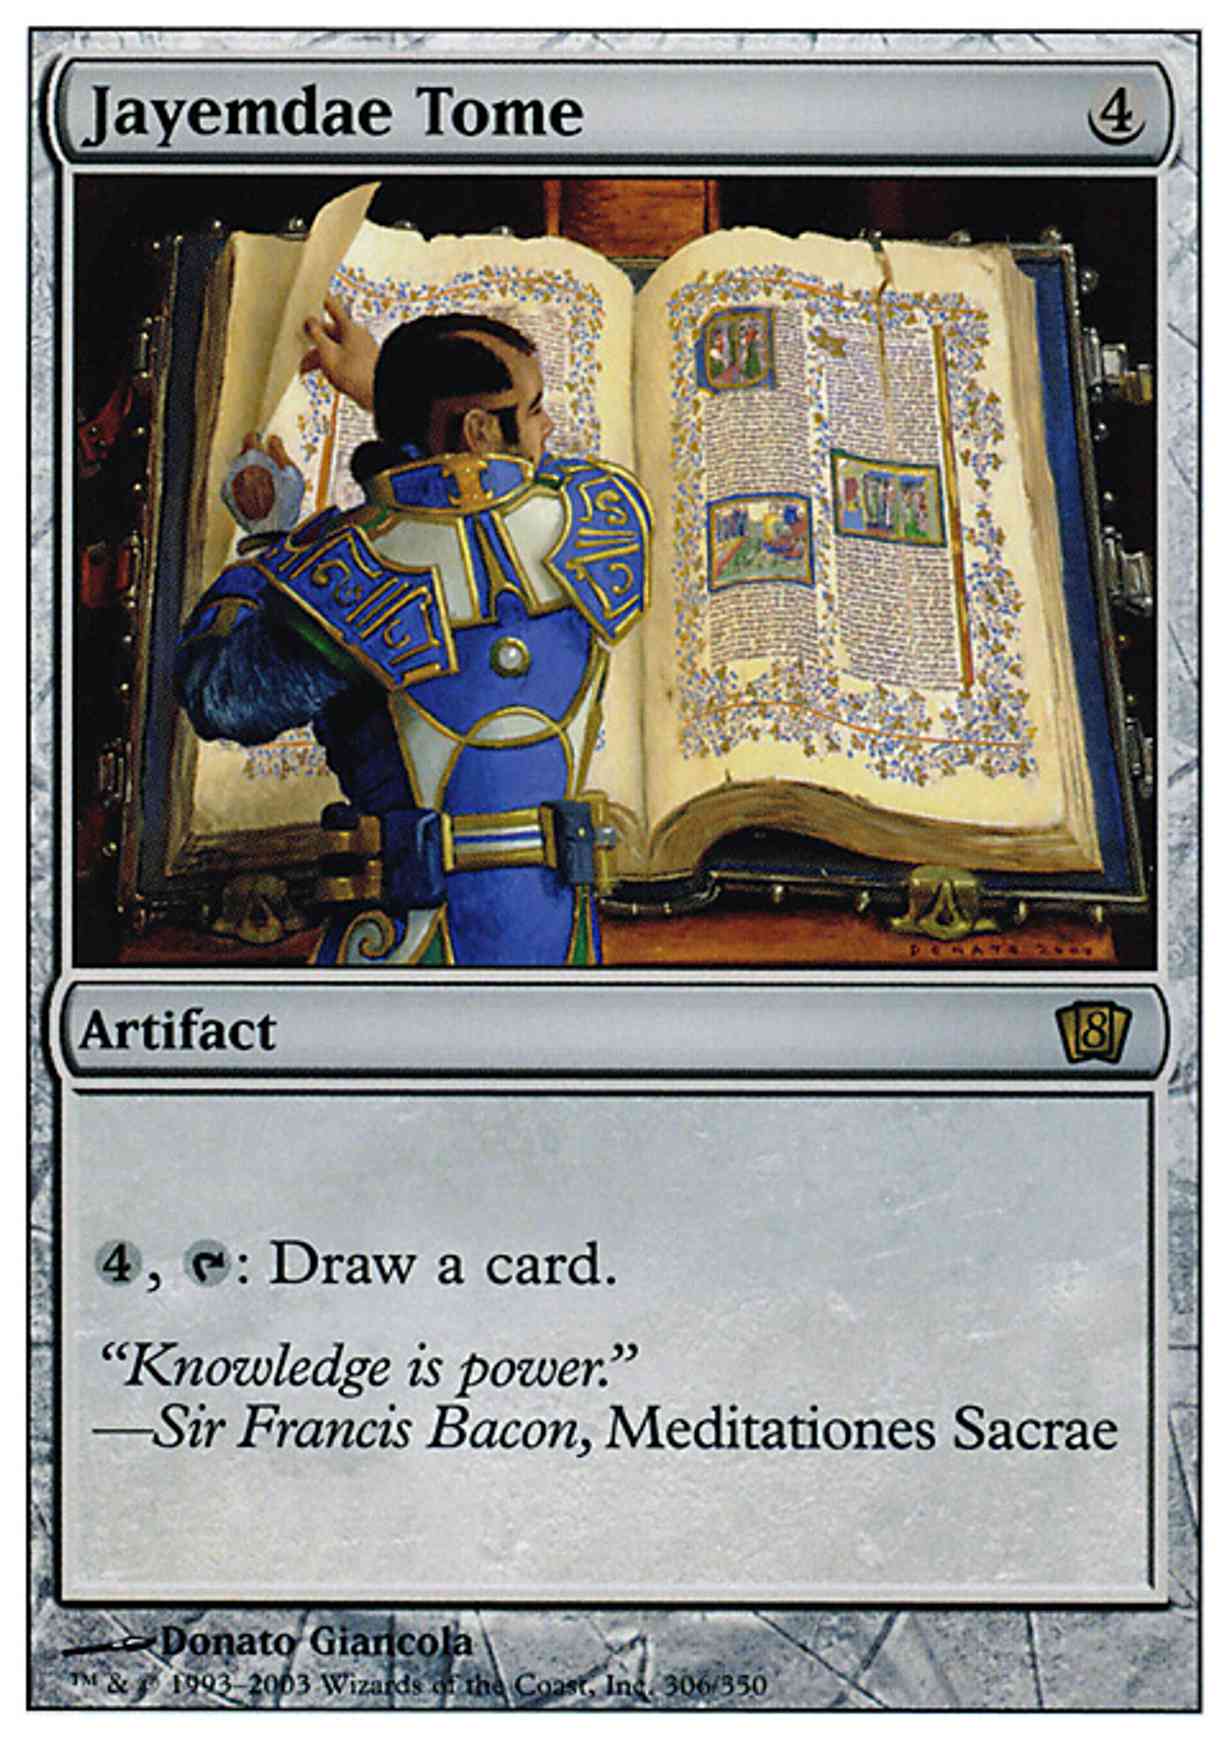 Jayemdae Tome magic card front